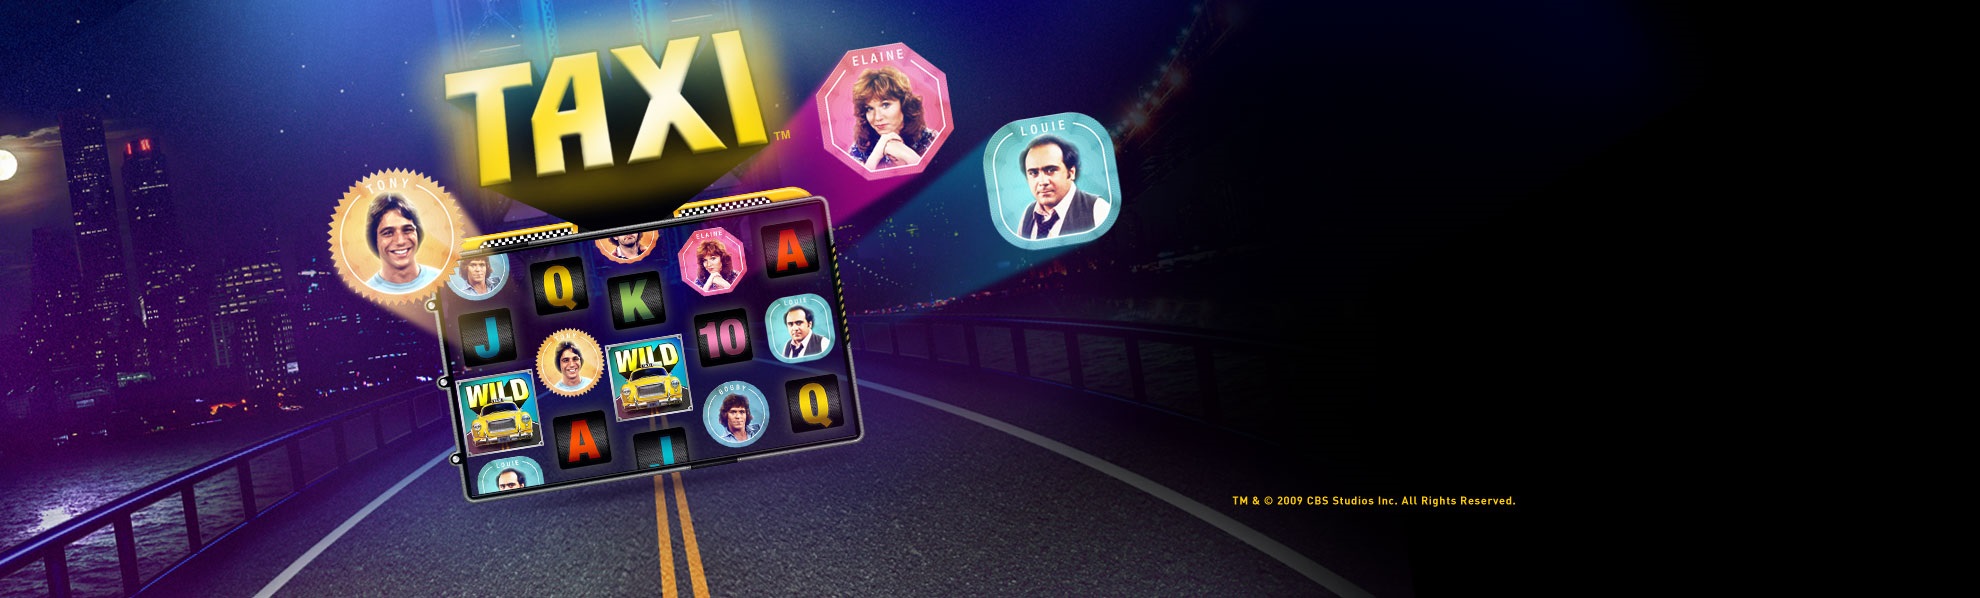 Taxi game screen